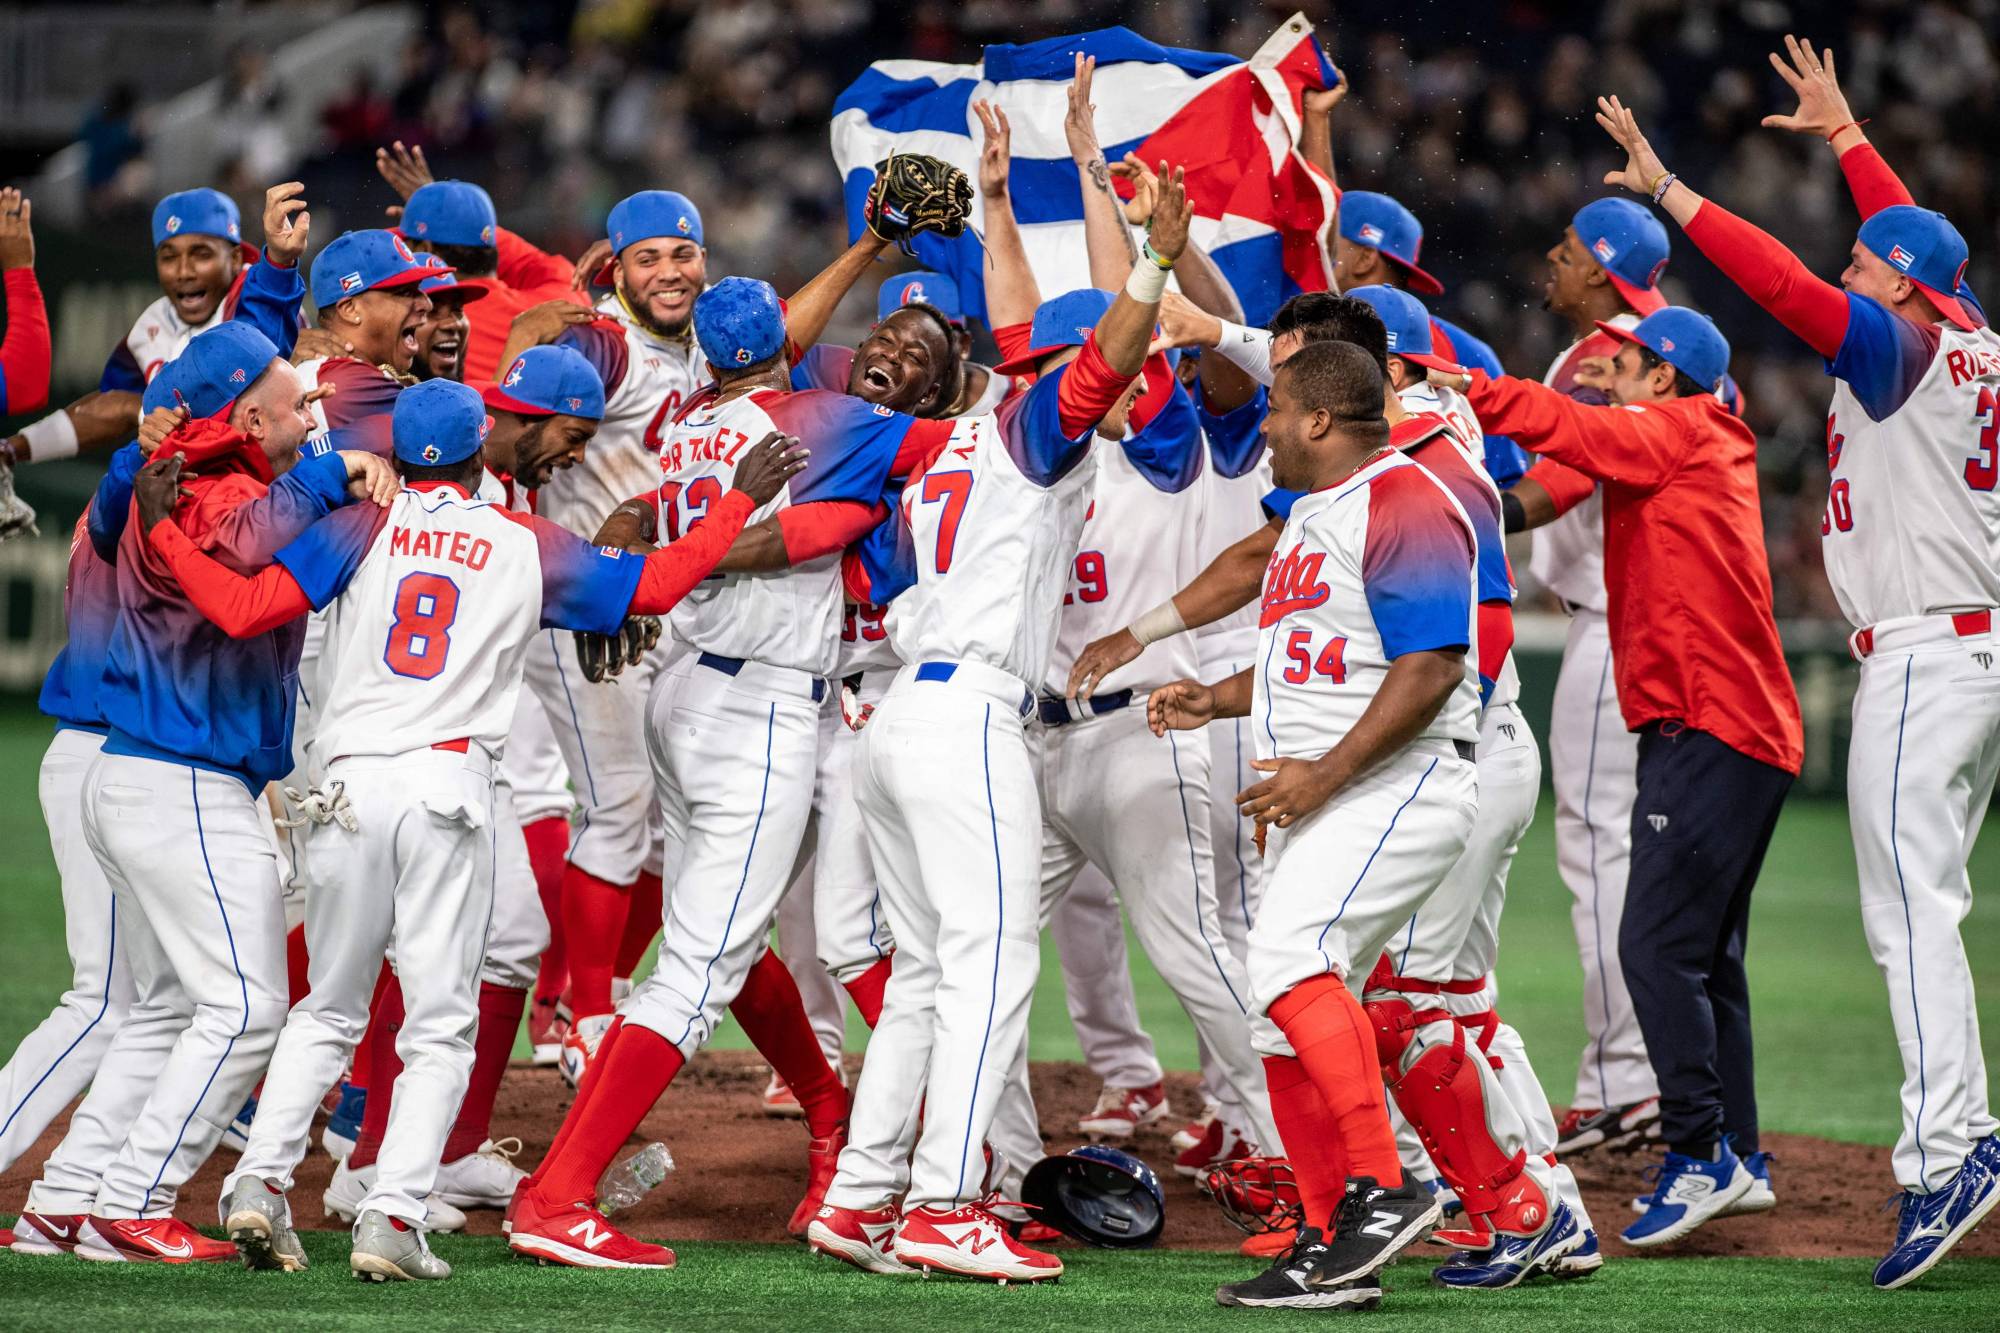 Cuba gets past Australia to reach World Baseball Classic semifinals